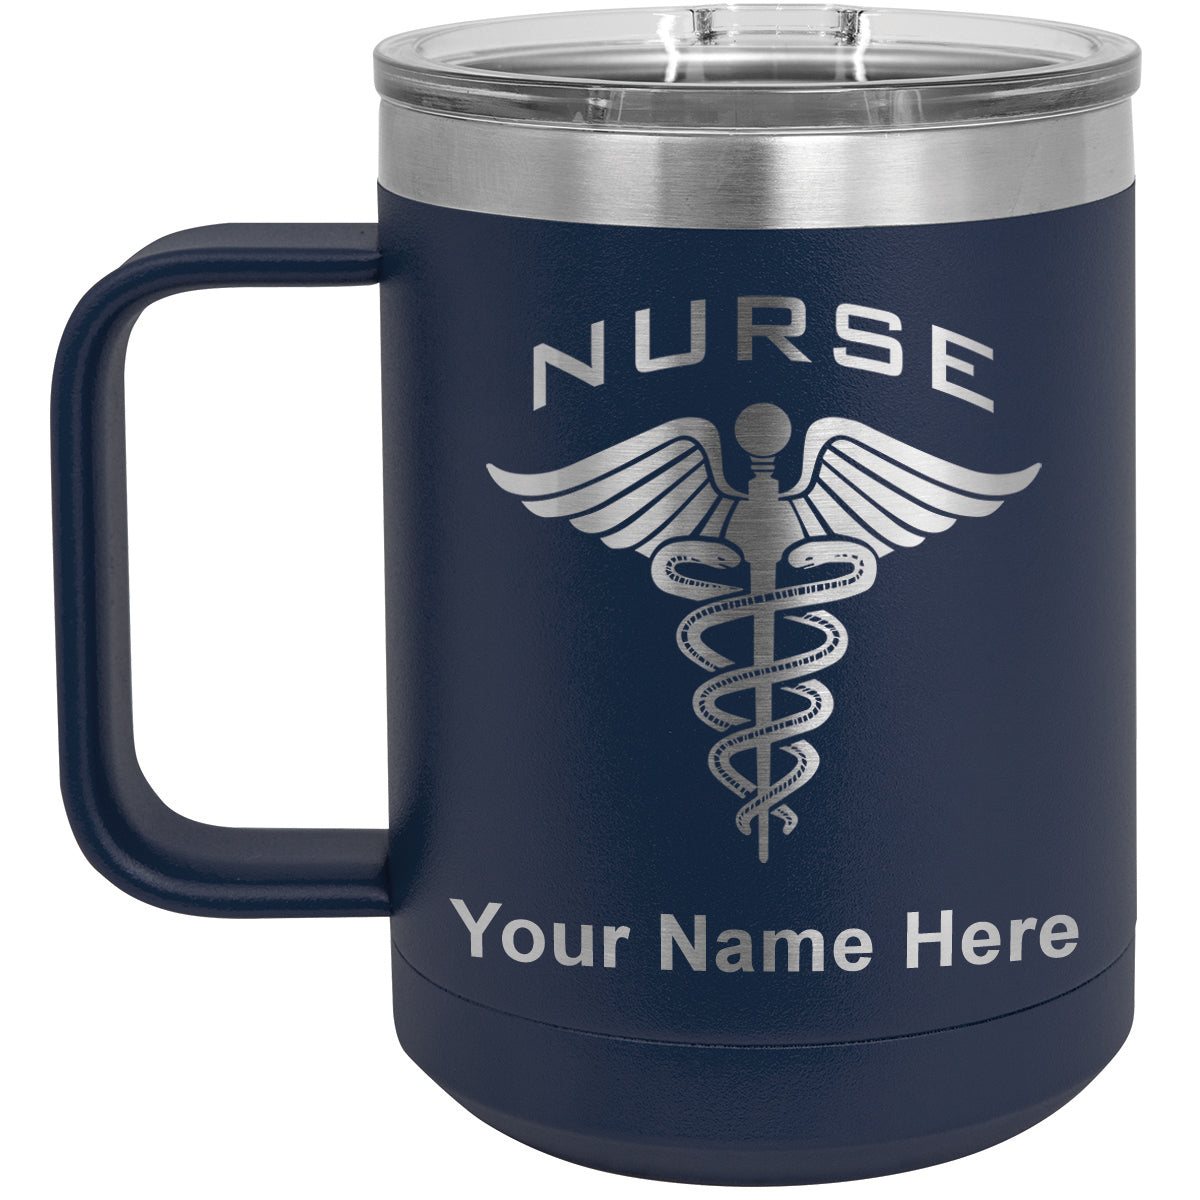 15oz Vacuum Insulated Coffee Mug, Nurse, Personalized Engraving Included